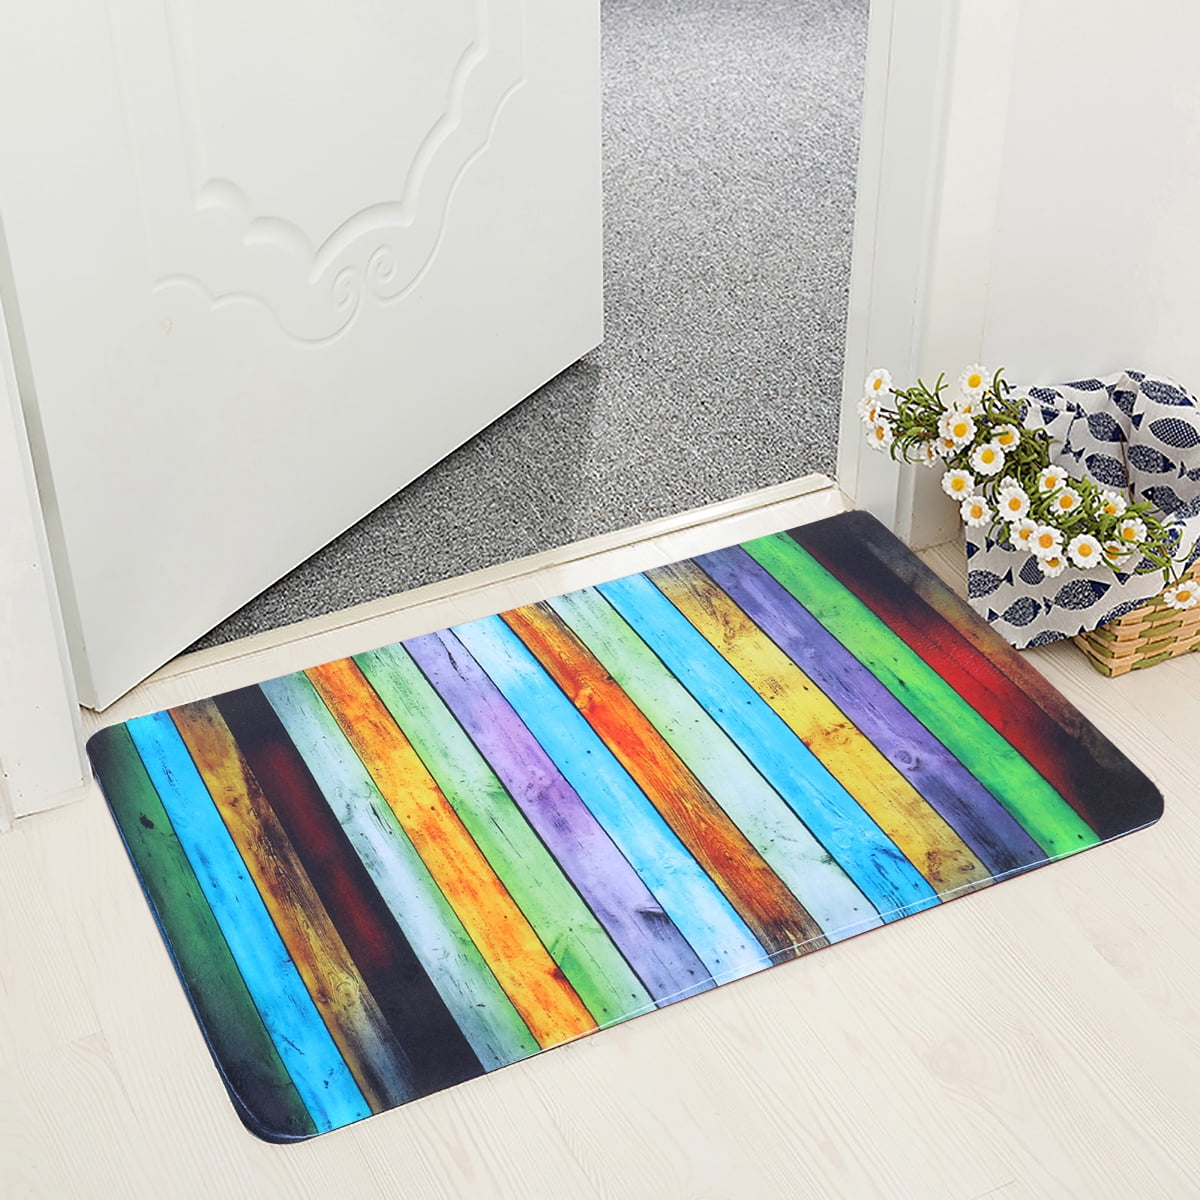 Details about   Floor Carpet Area Rug Door Mats Soft Non-Slip Rainbow Color Kitchen Bathroom ~